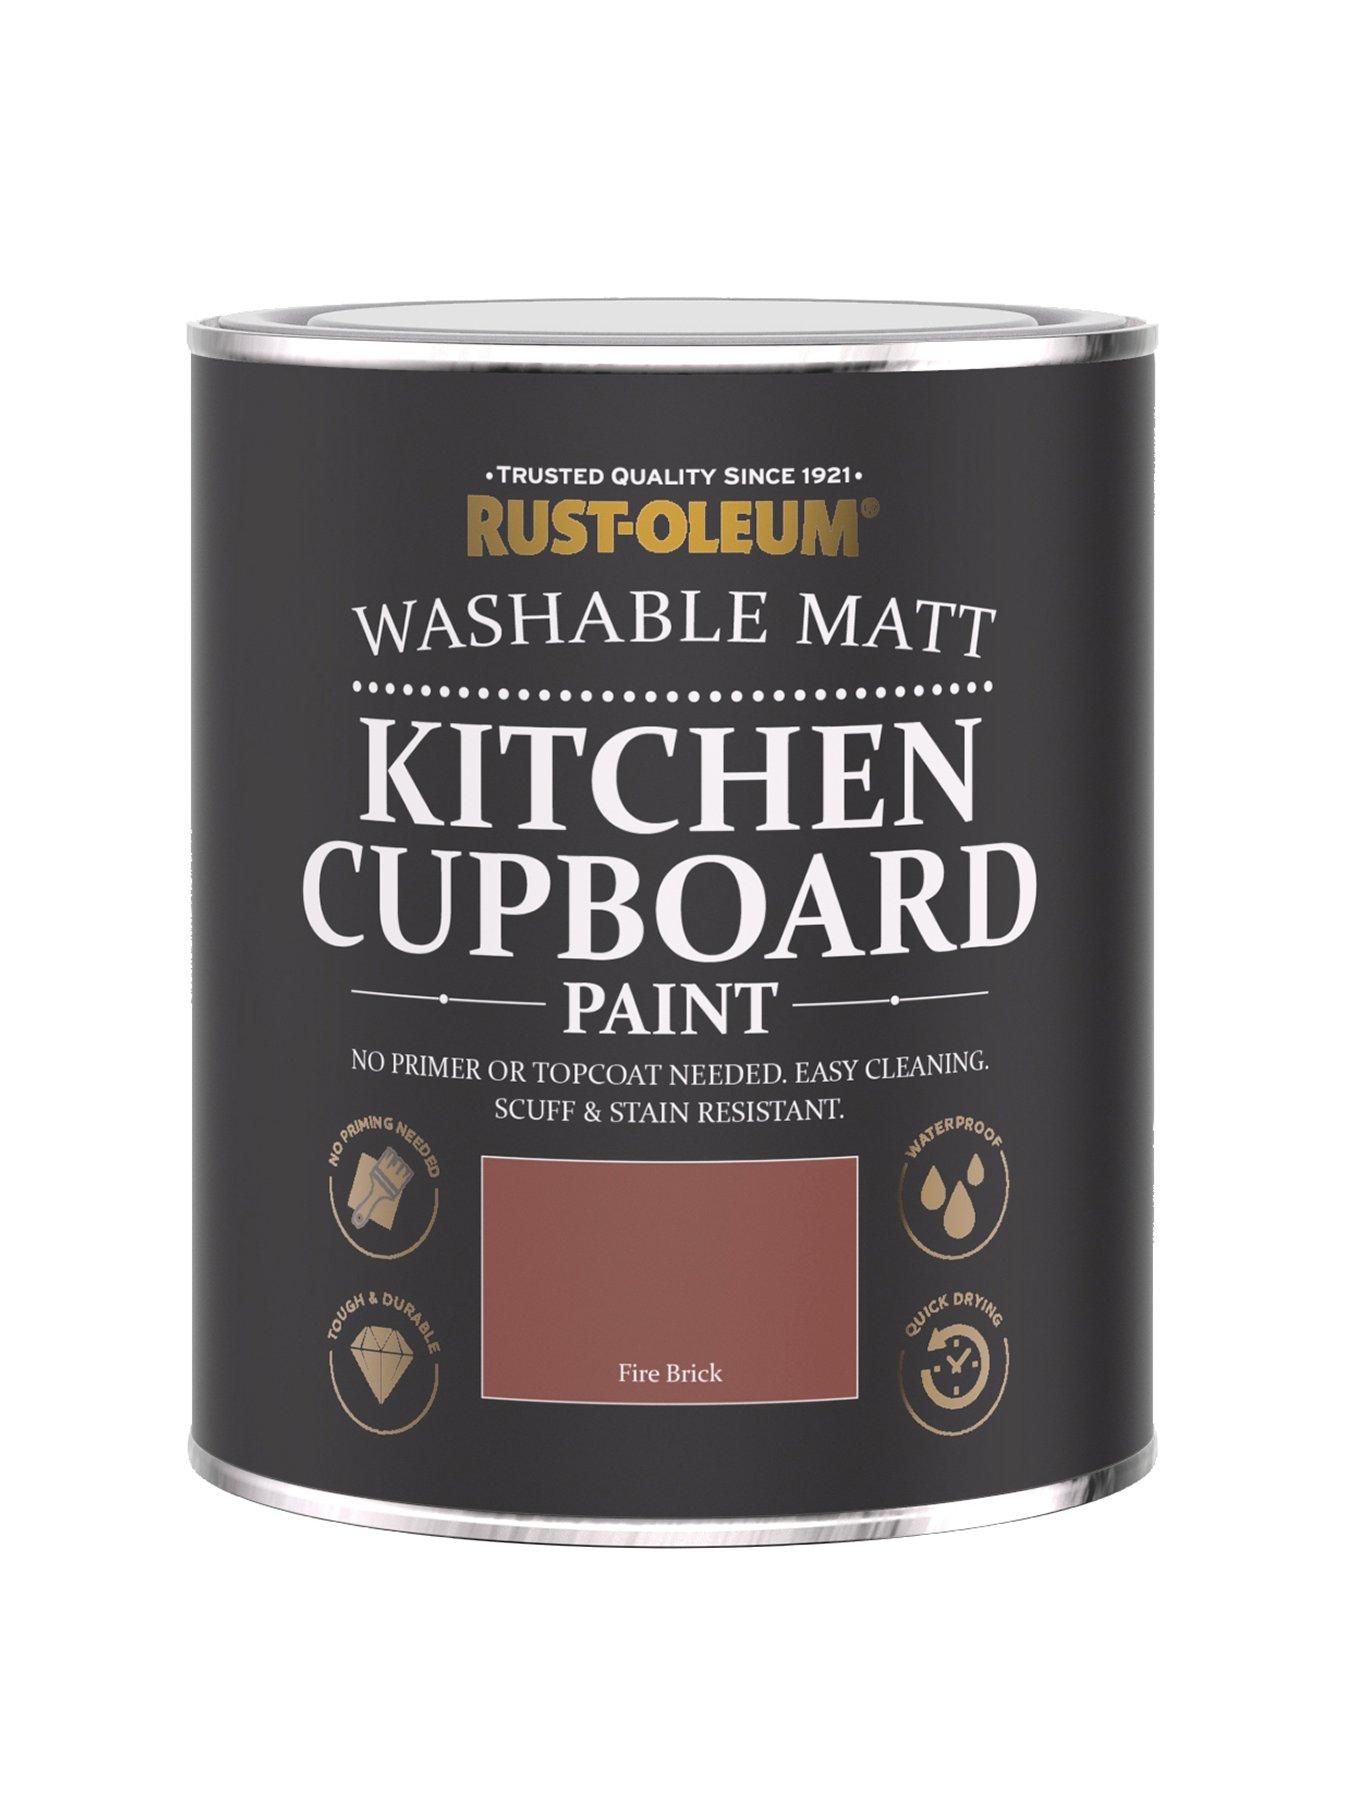 Product photograph of Rust-oleum Washable Matt Finish Kitchen Cupboard Paint Ndash Fire Brick from very.co.uk